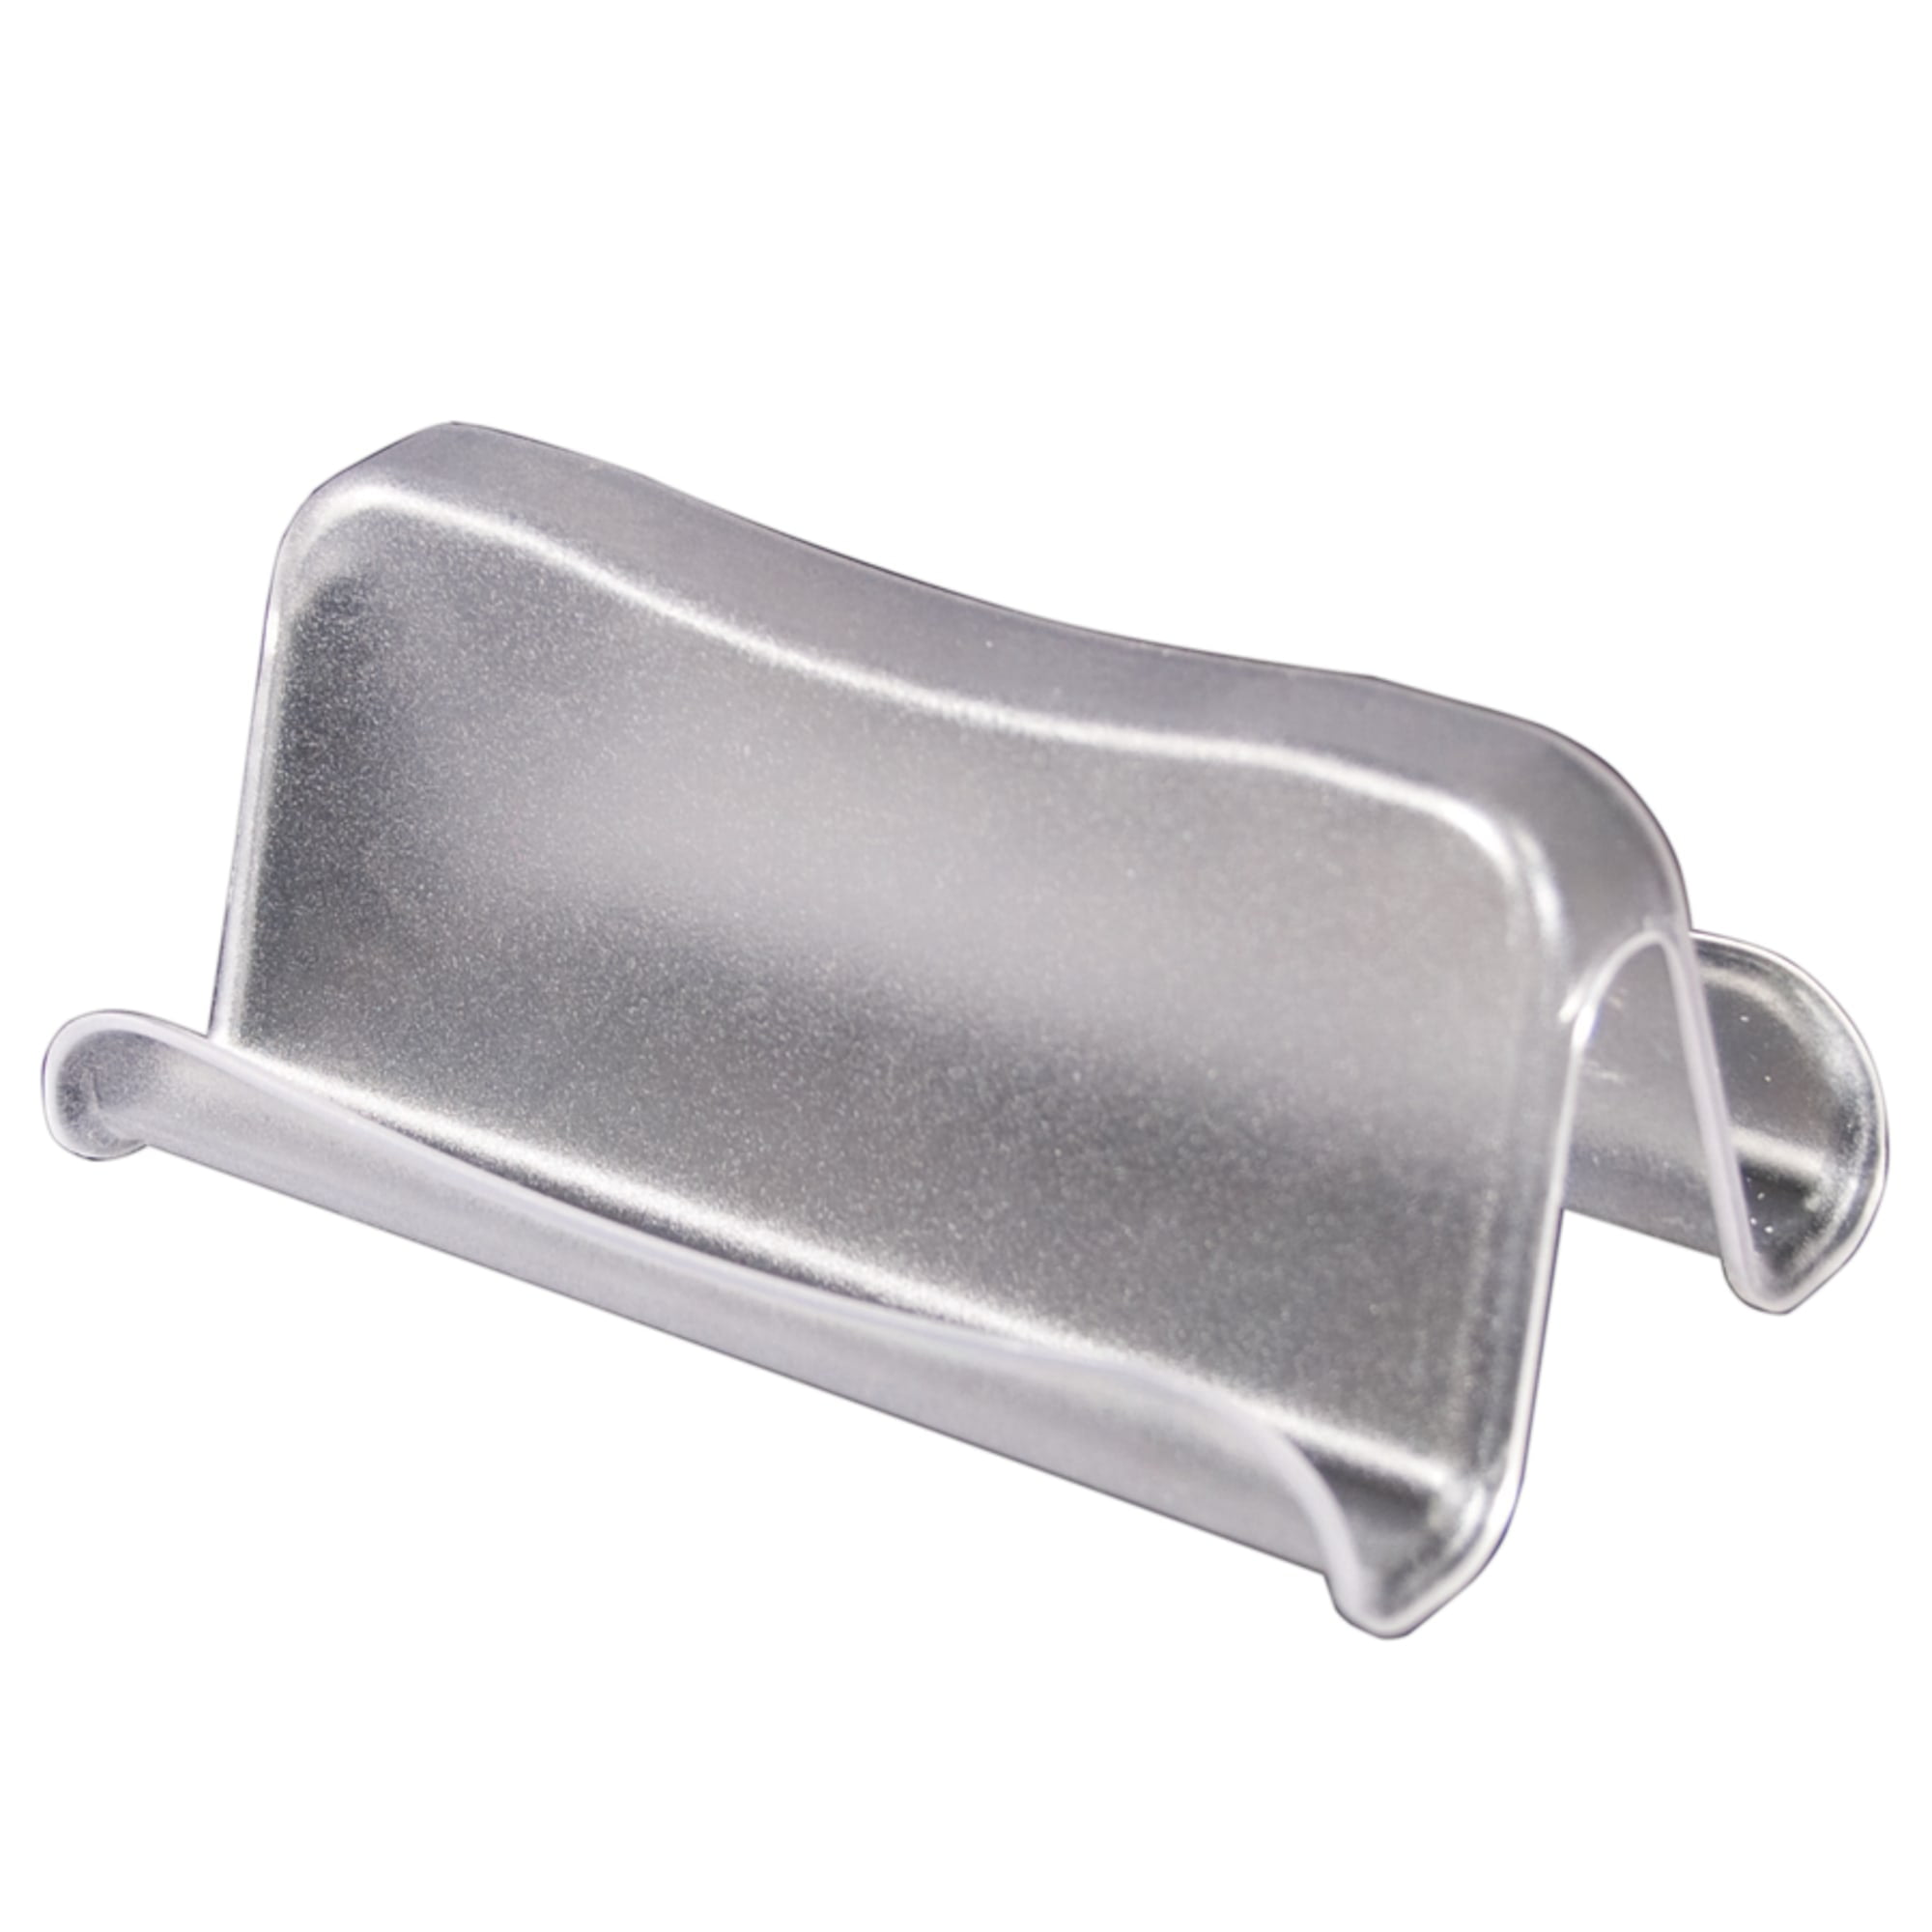 Stainless Steel Pocket Business Card Holder - Sleek Metal Case for